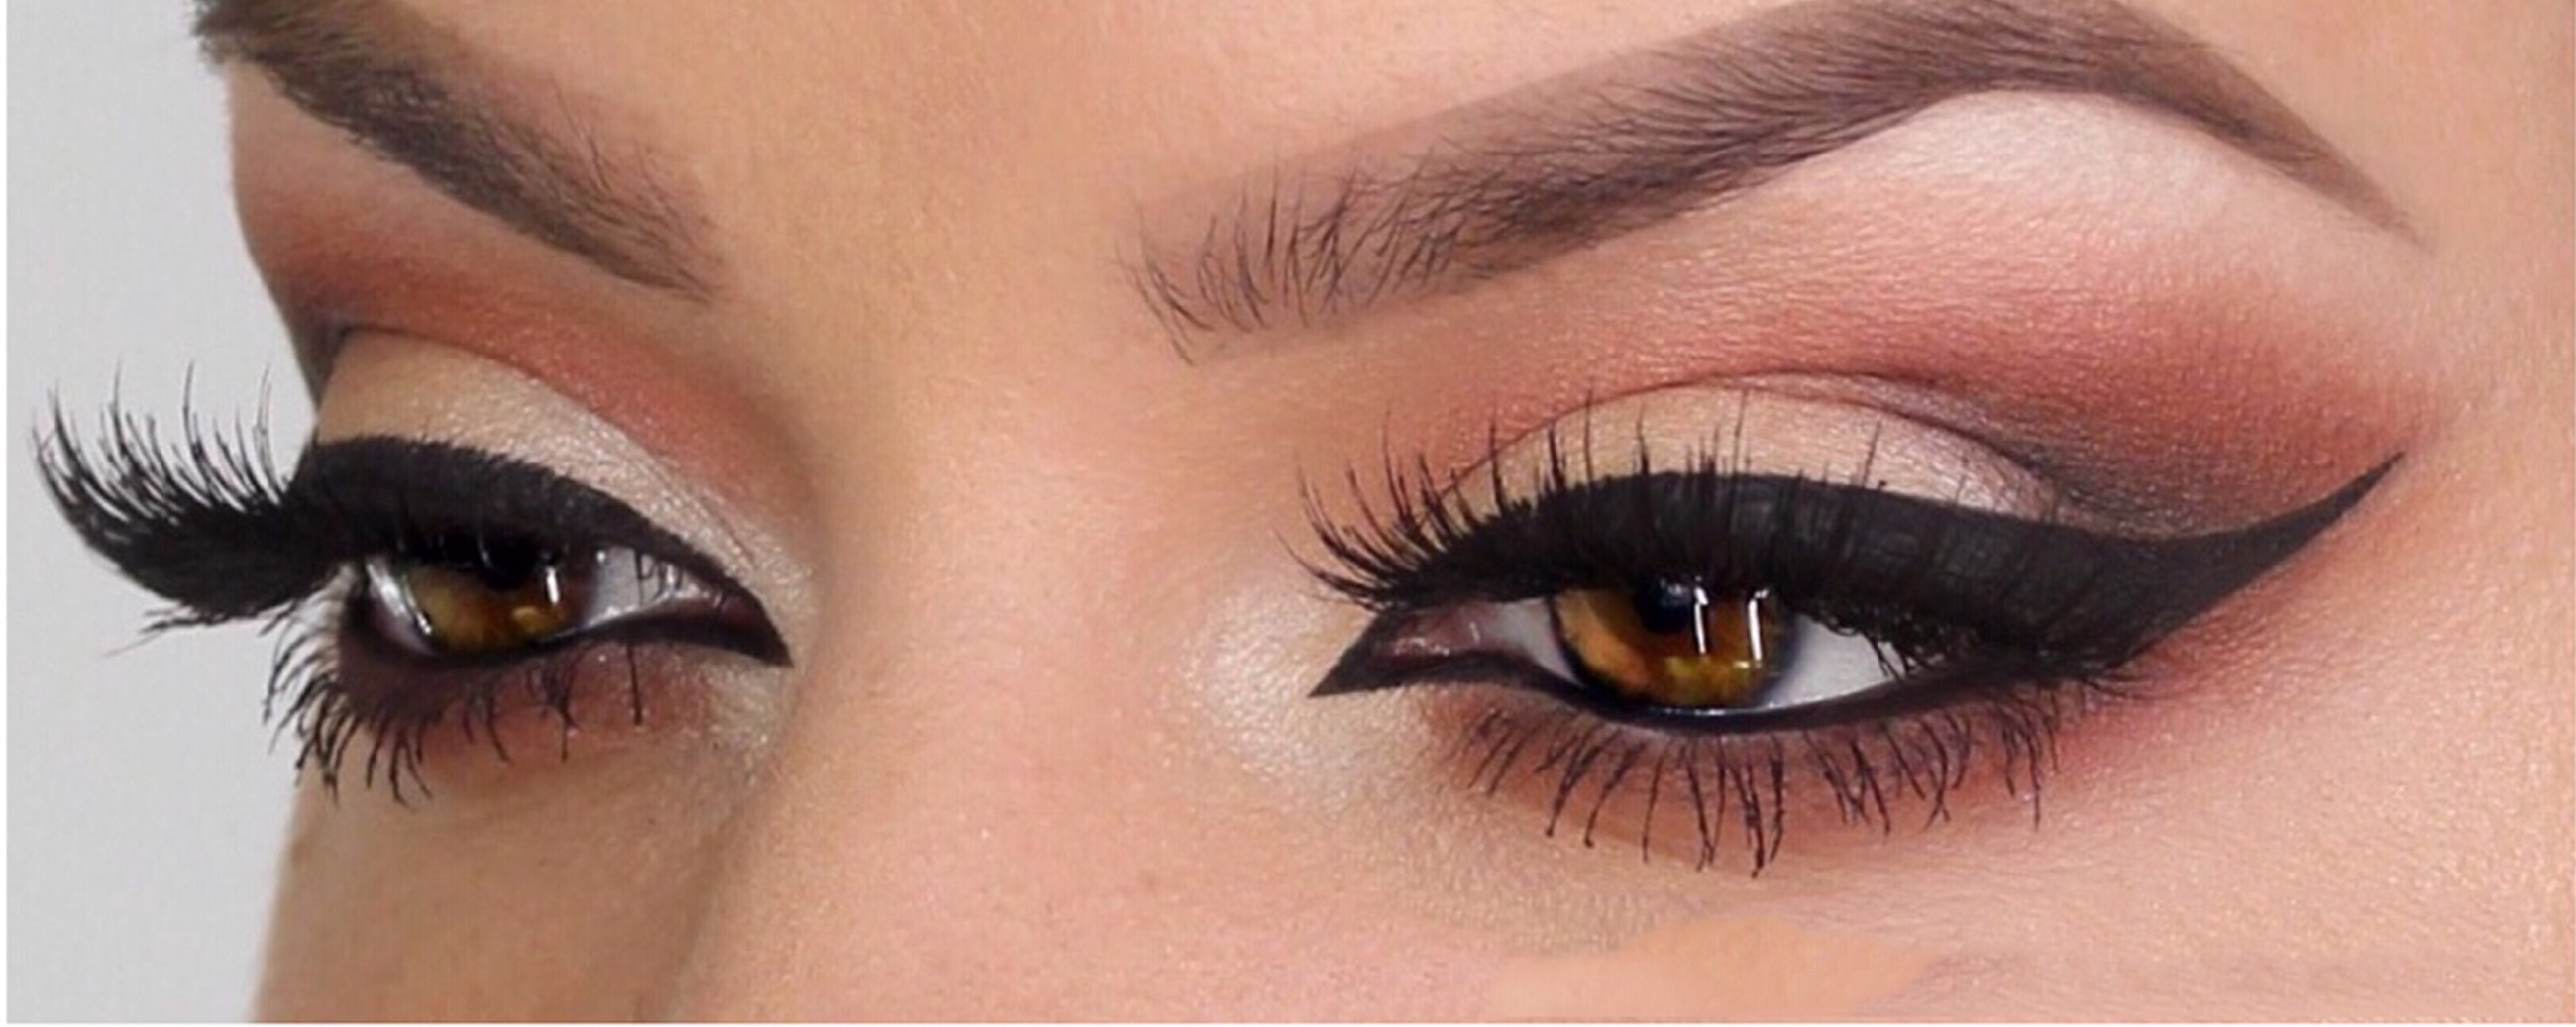 Eye Makeup Wings How To Apply Liquid Eyeliner Like A Pro Sangam Vesh Medium